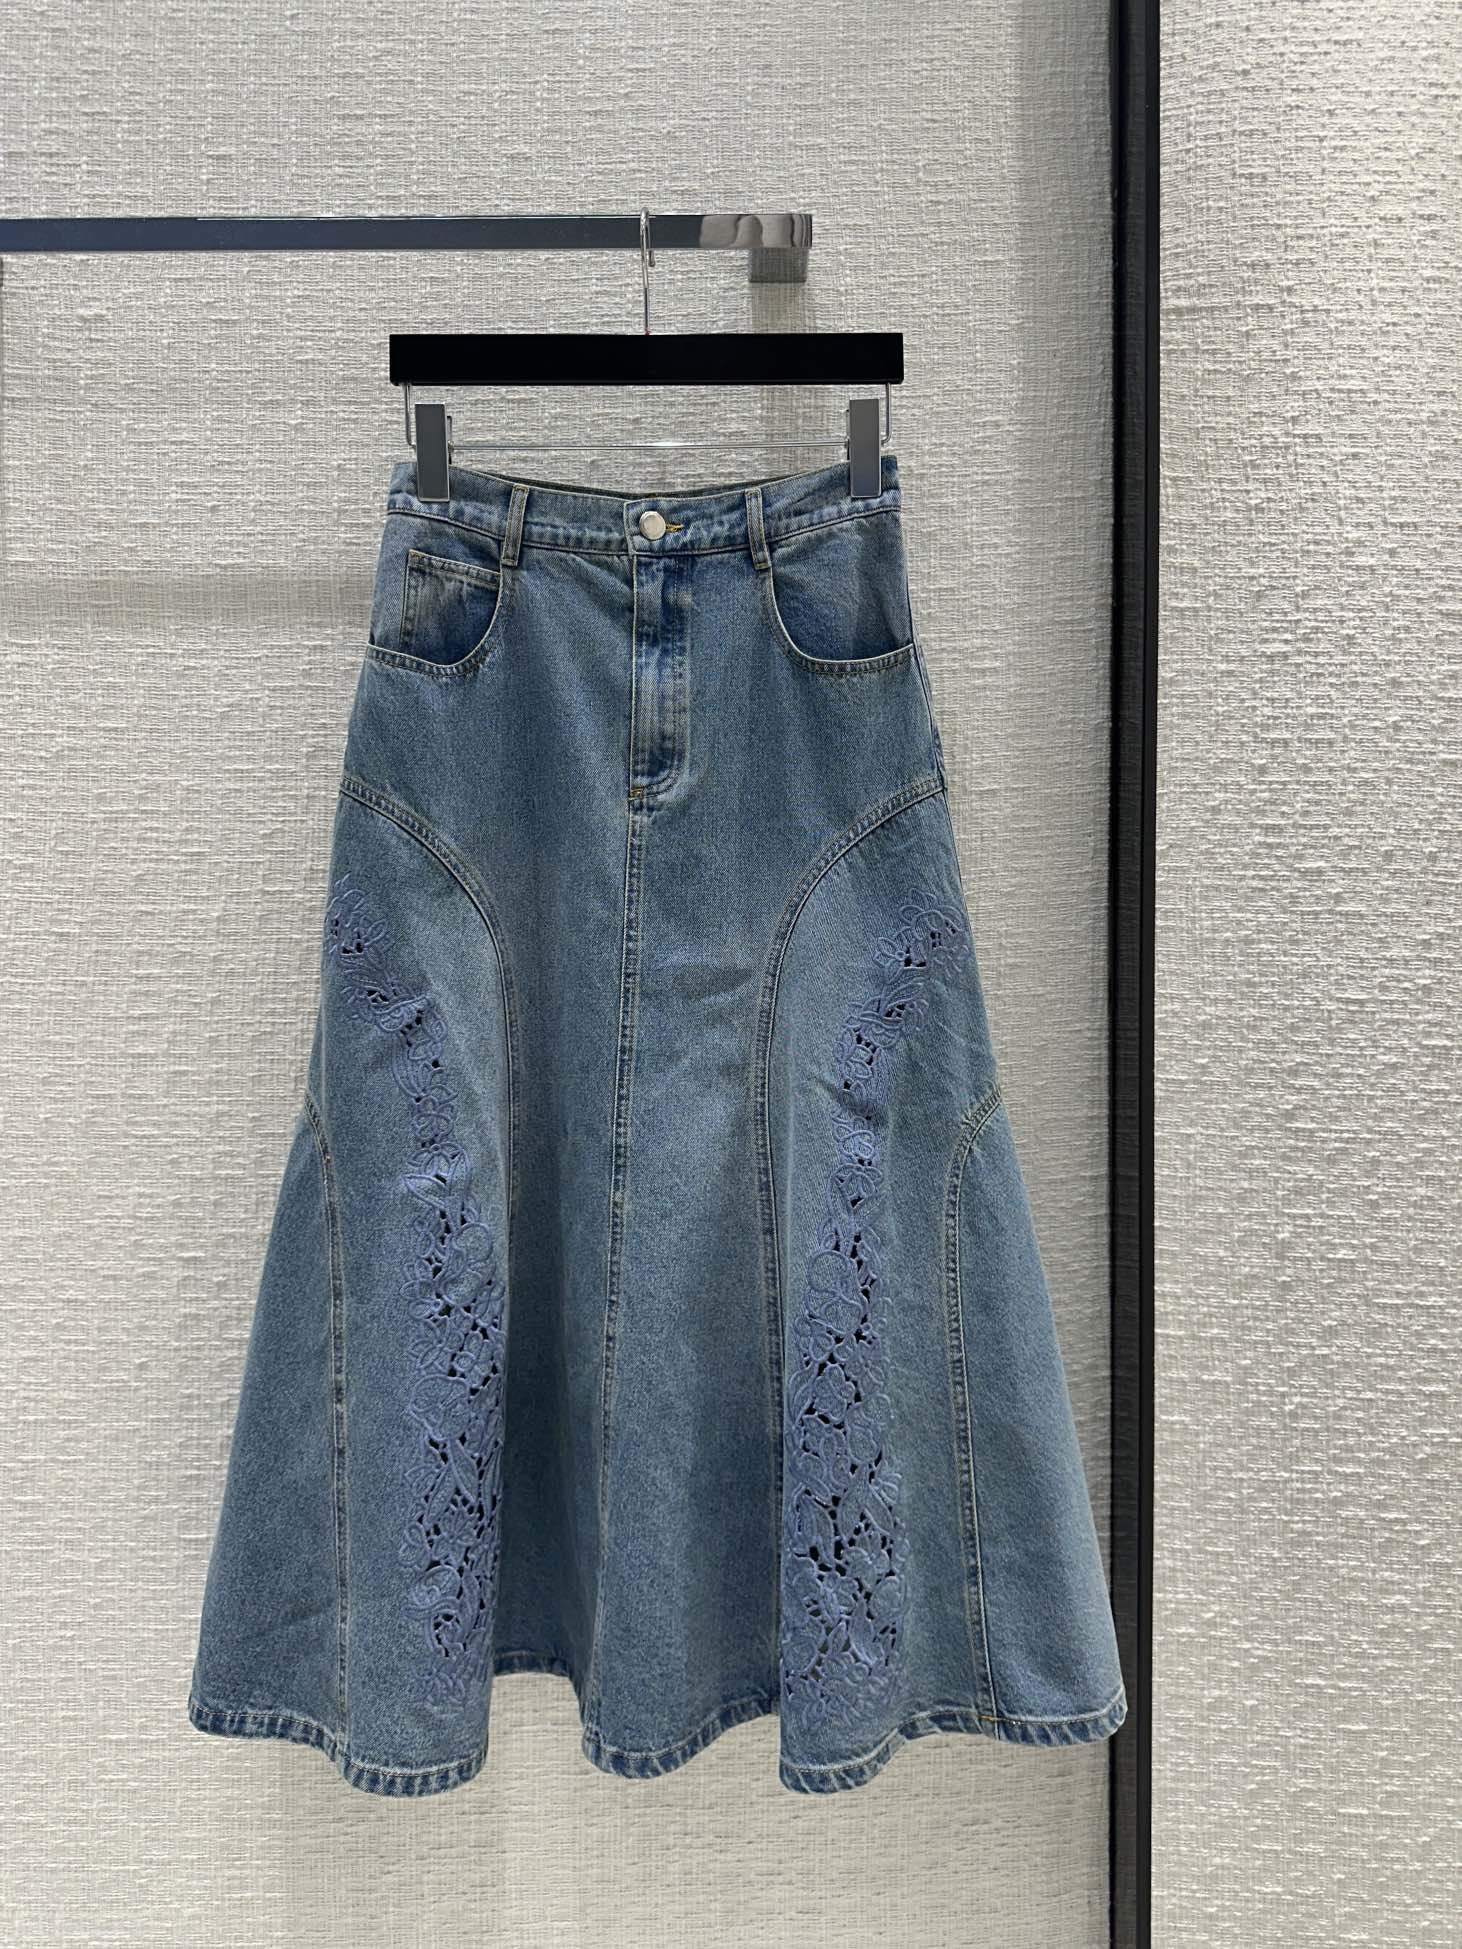 La réplica de calidad
 Chloe Clothing Skirts Embroidery Spring/Summer Collection Casual